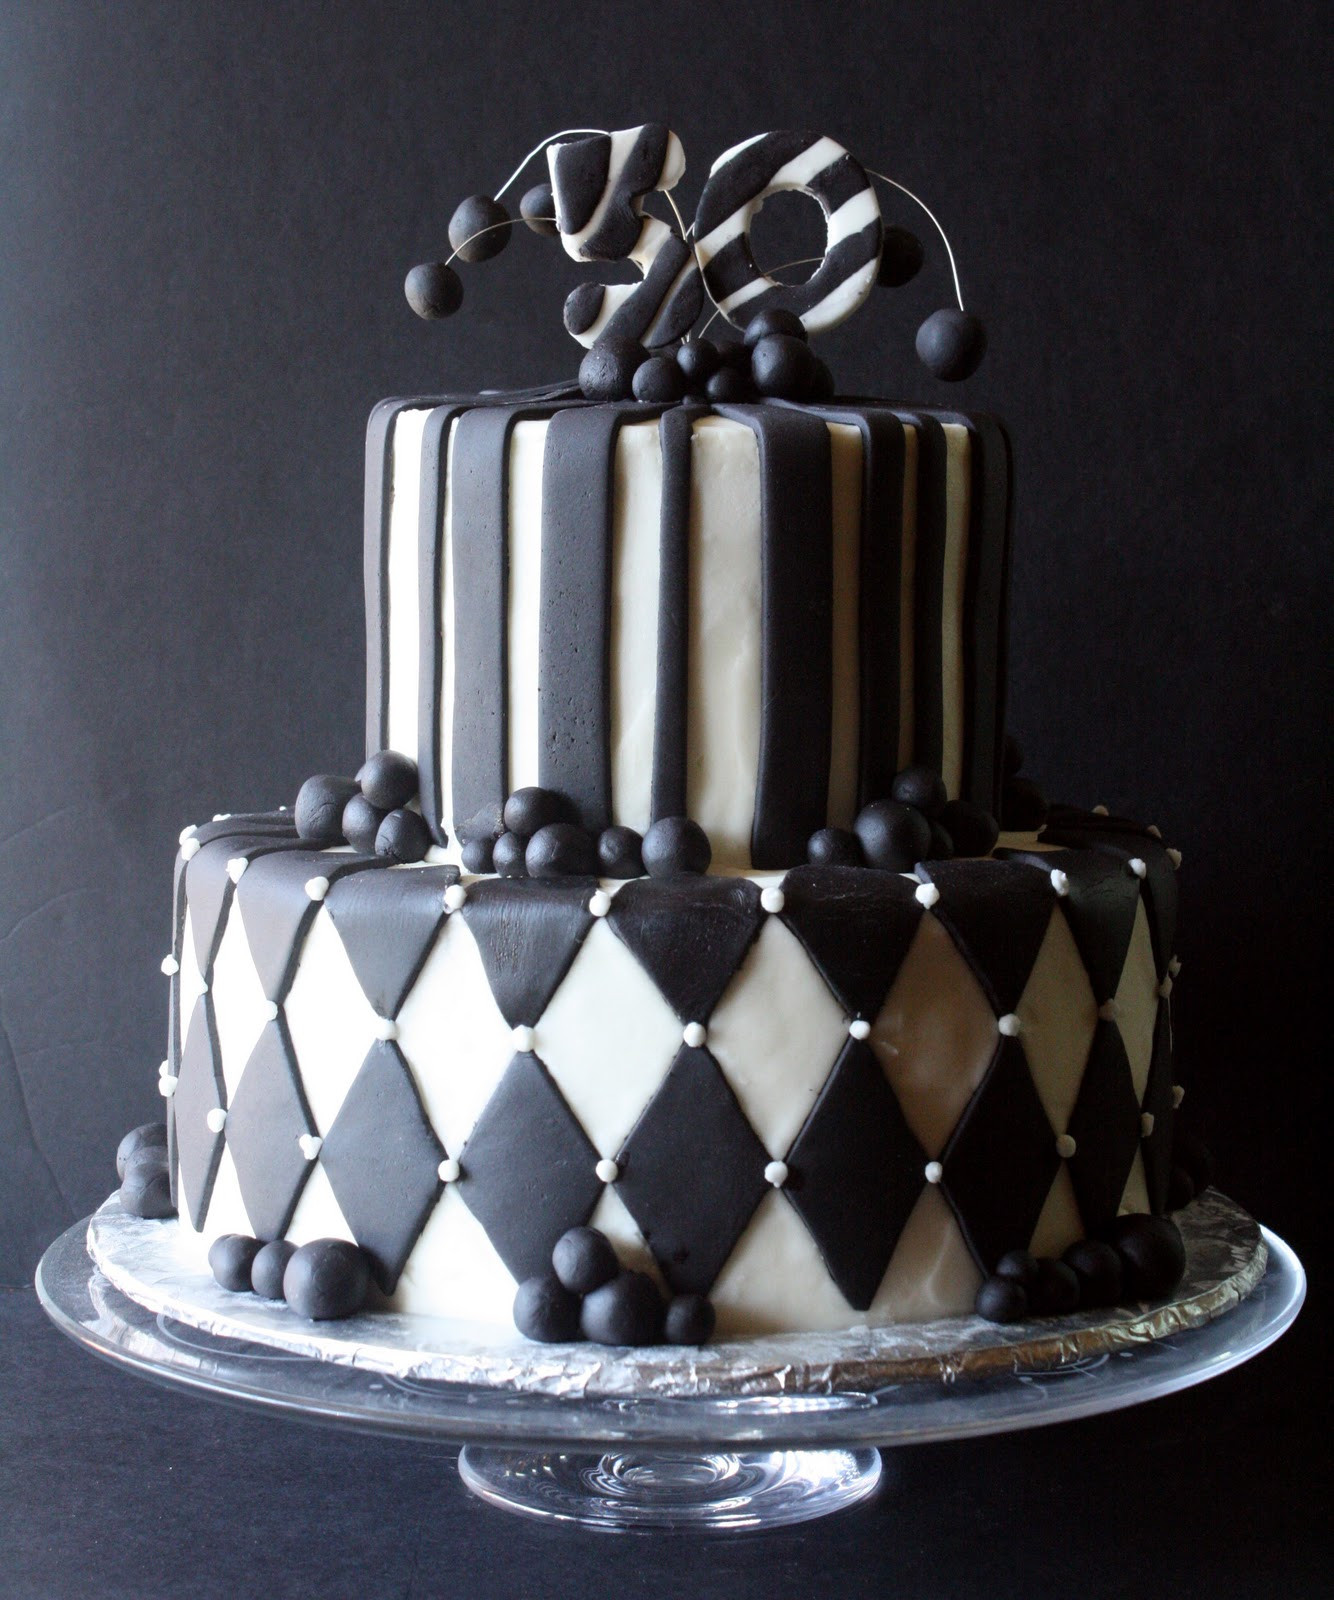 Black And White Birthday Cakes
 Black & White 50th Birthday Cake